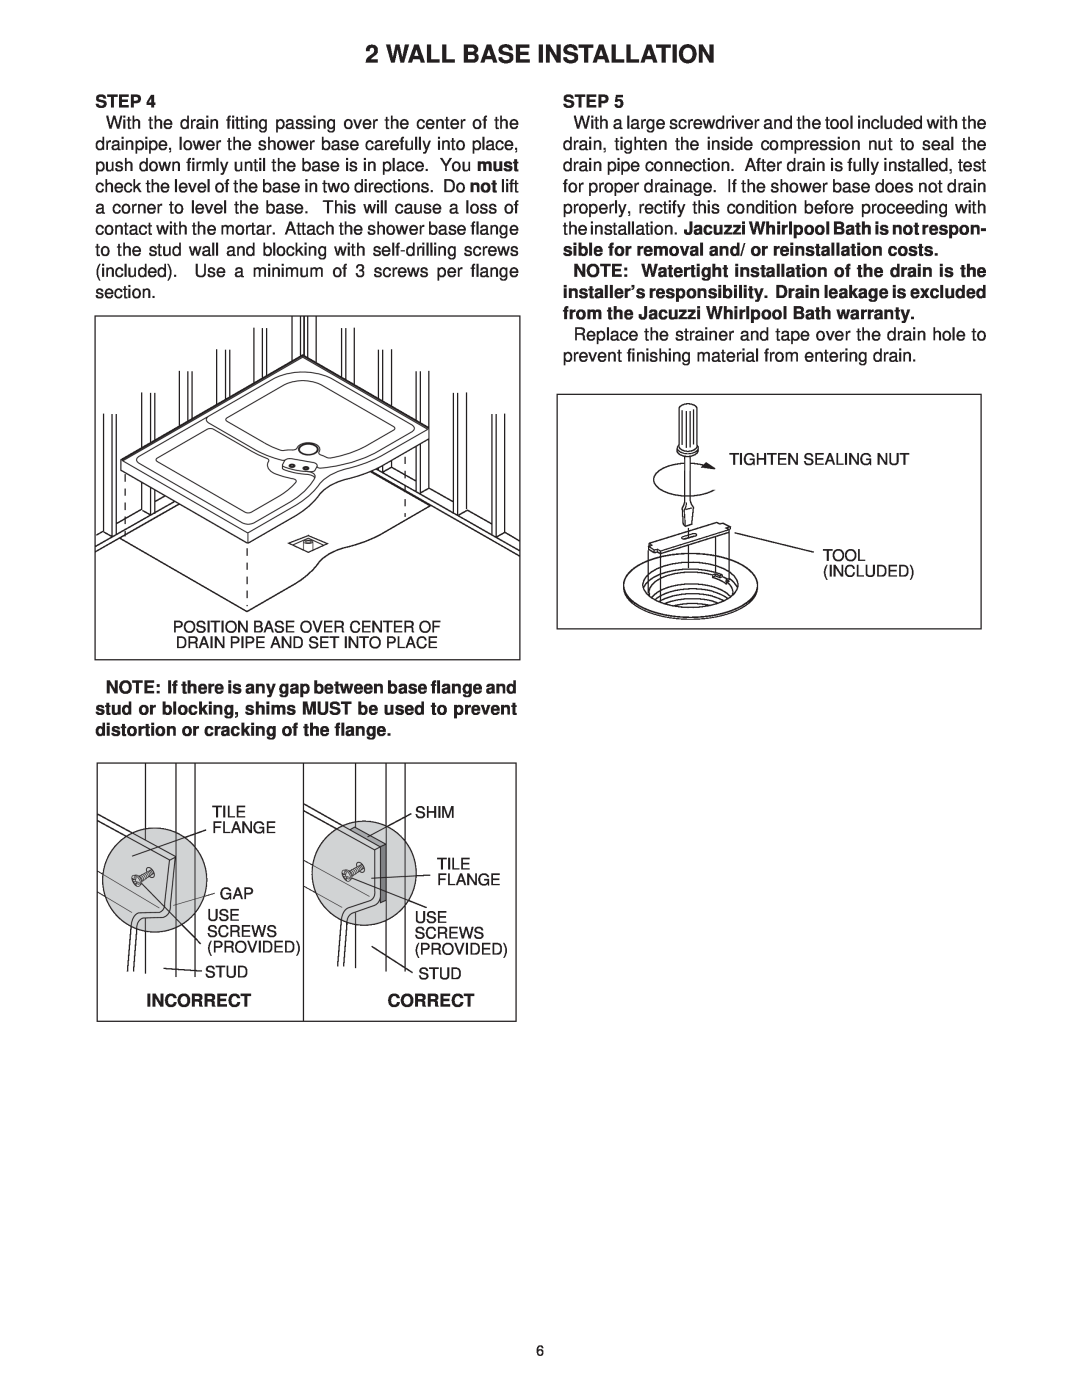 Jacuzzi 2 Wall and 3 Wall manual Incorrect, Correct, Wall Base Installation, Step 